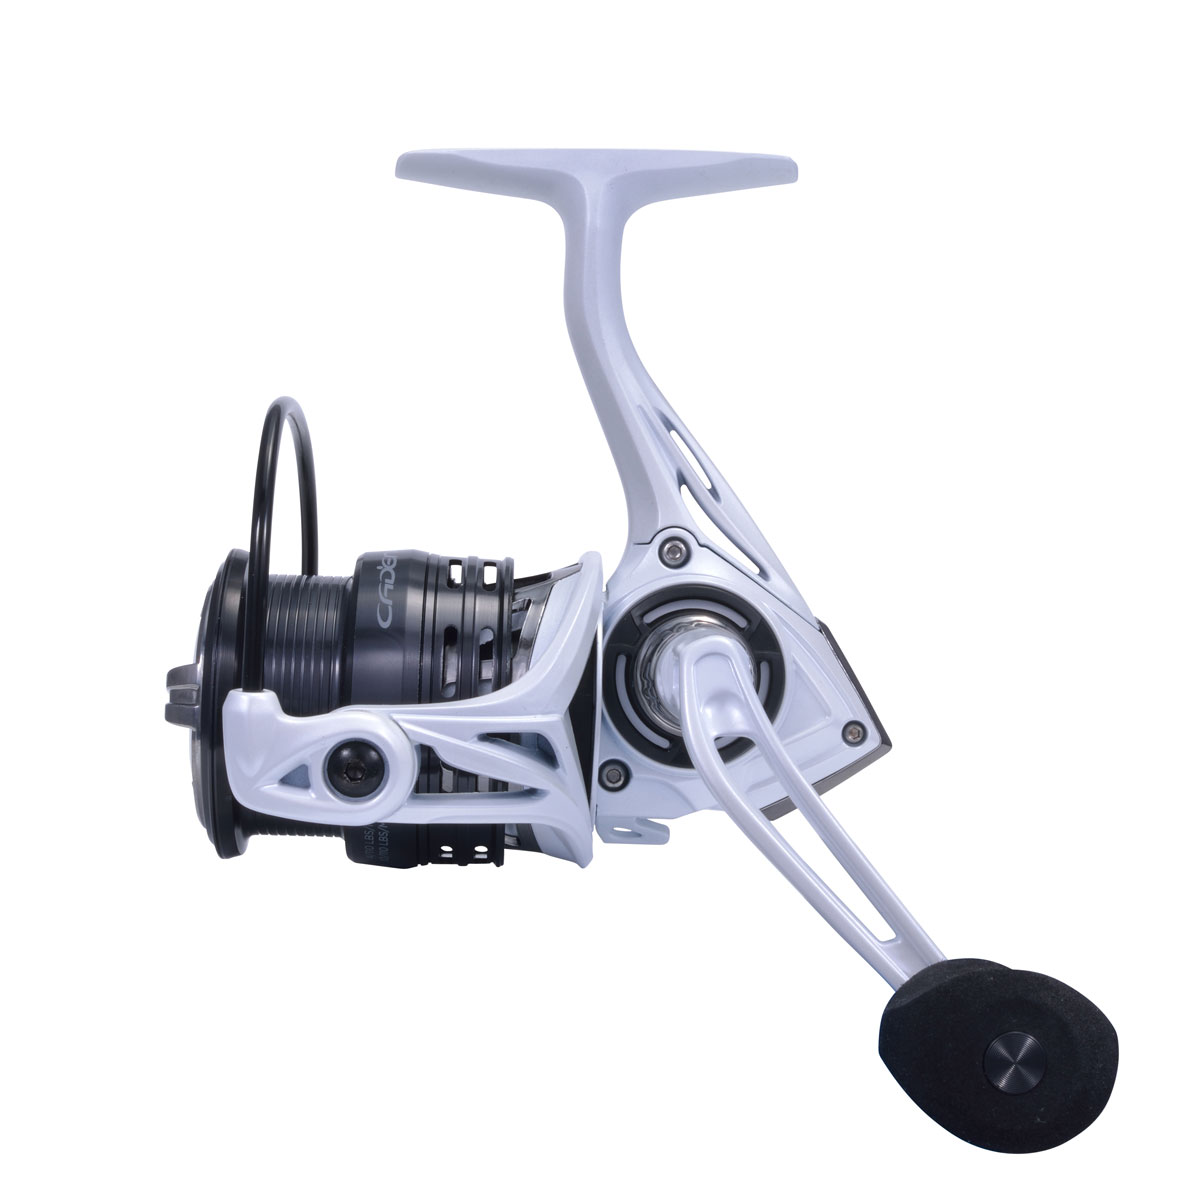 Cadence Fishing - The CS8 spinning reel has a lightweight